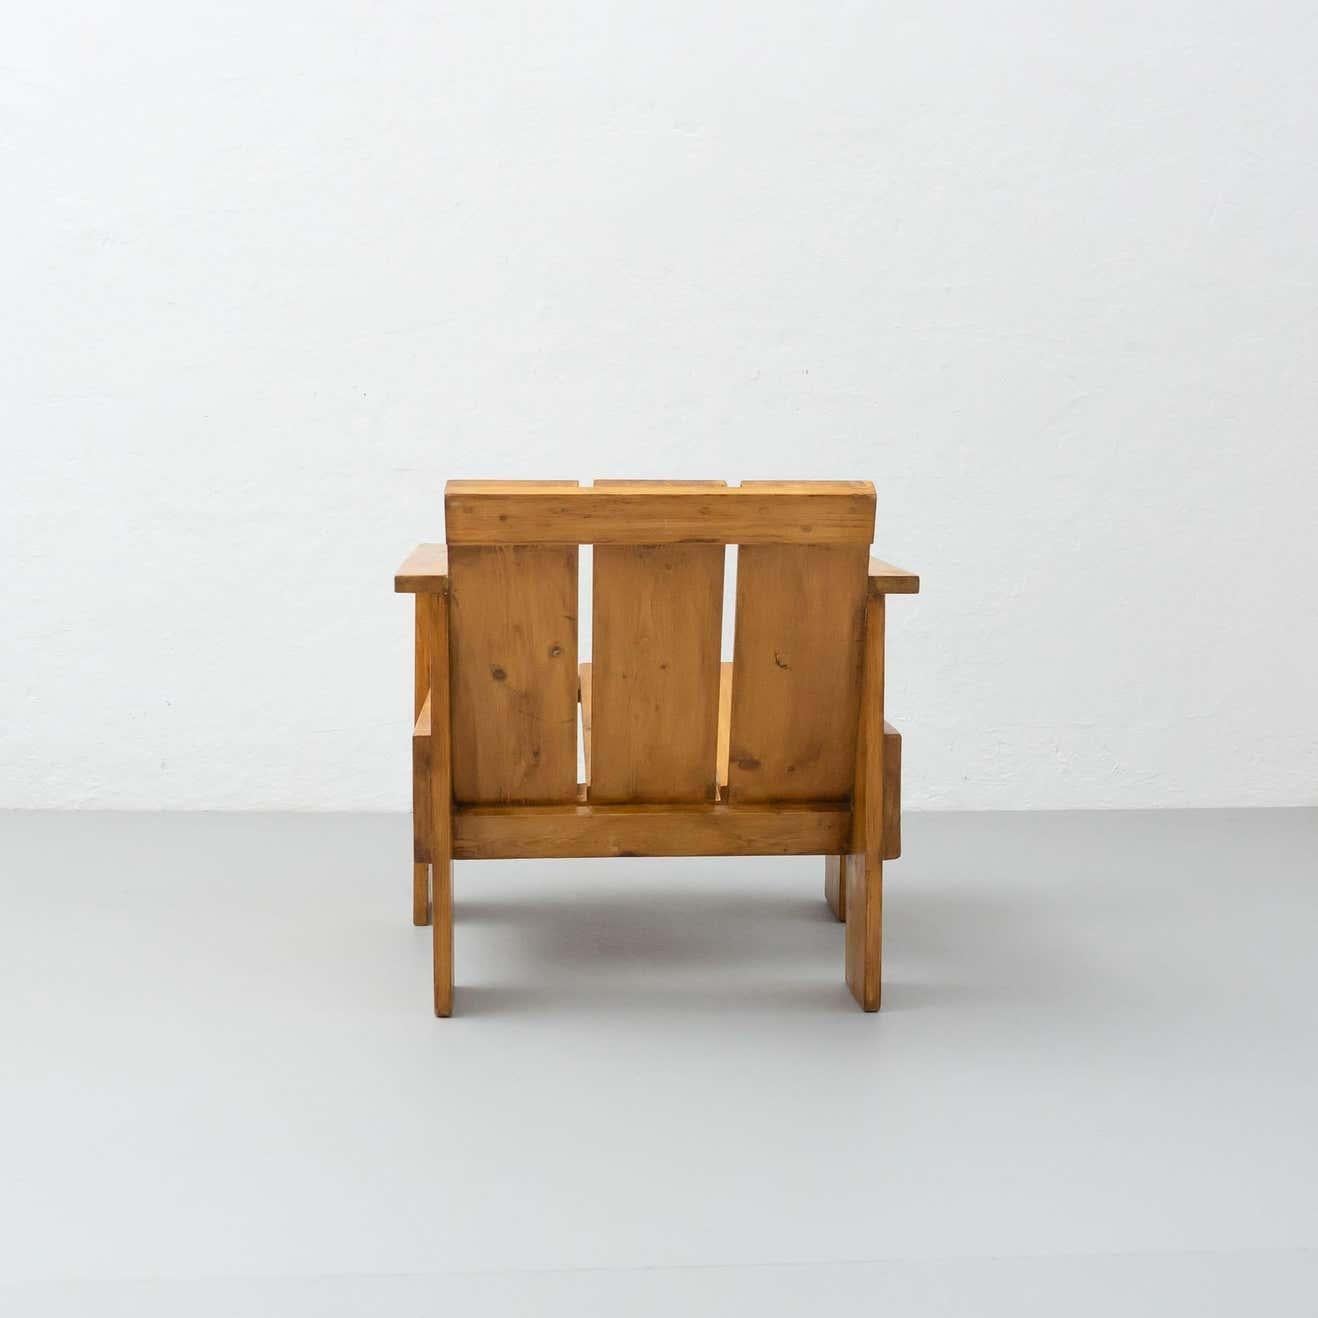 Dutch Gerrit Rietveld Mid-Century Modern Wood Crate Chair, circa 1950 For Sale